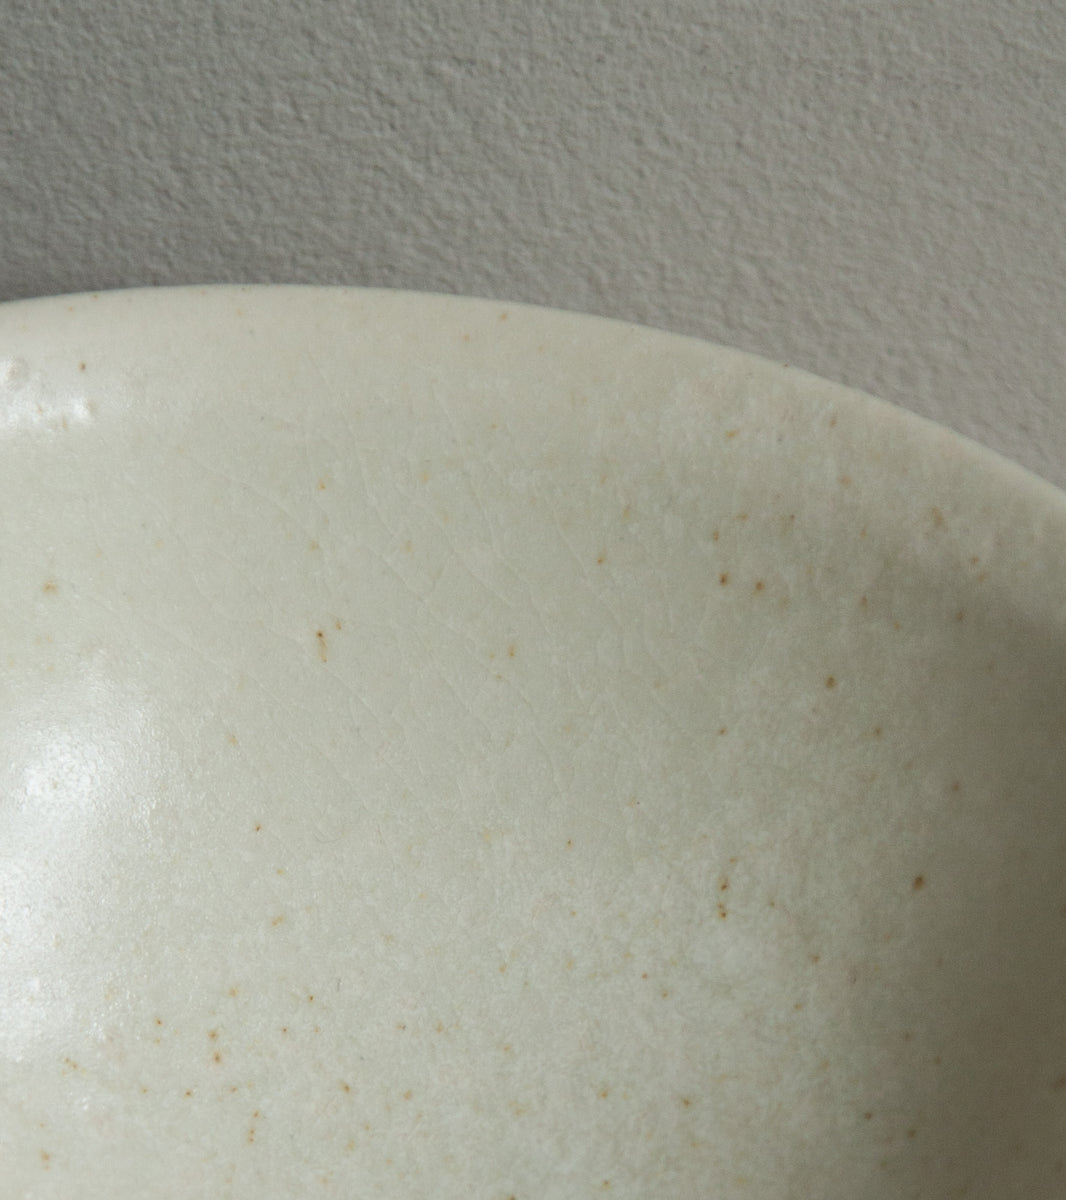 Medium Flat Out Bowl White Glaze Kasper Würtz - Image 7